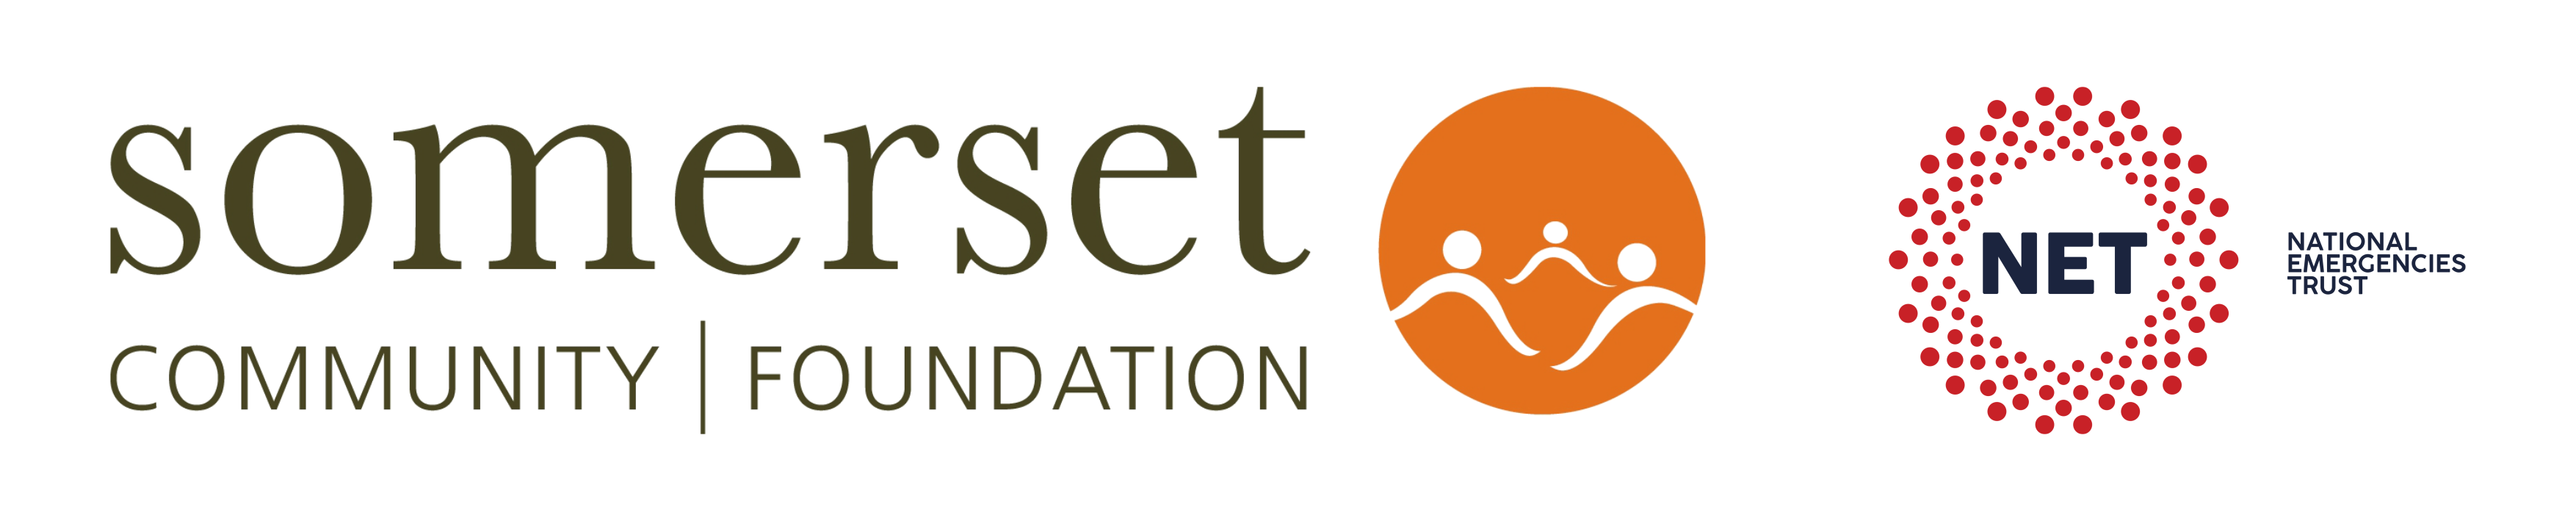 Somerset Community Foundation